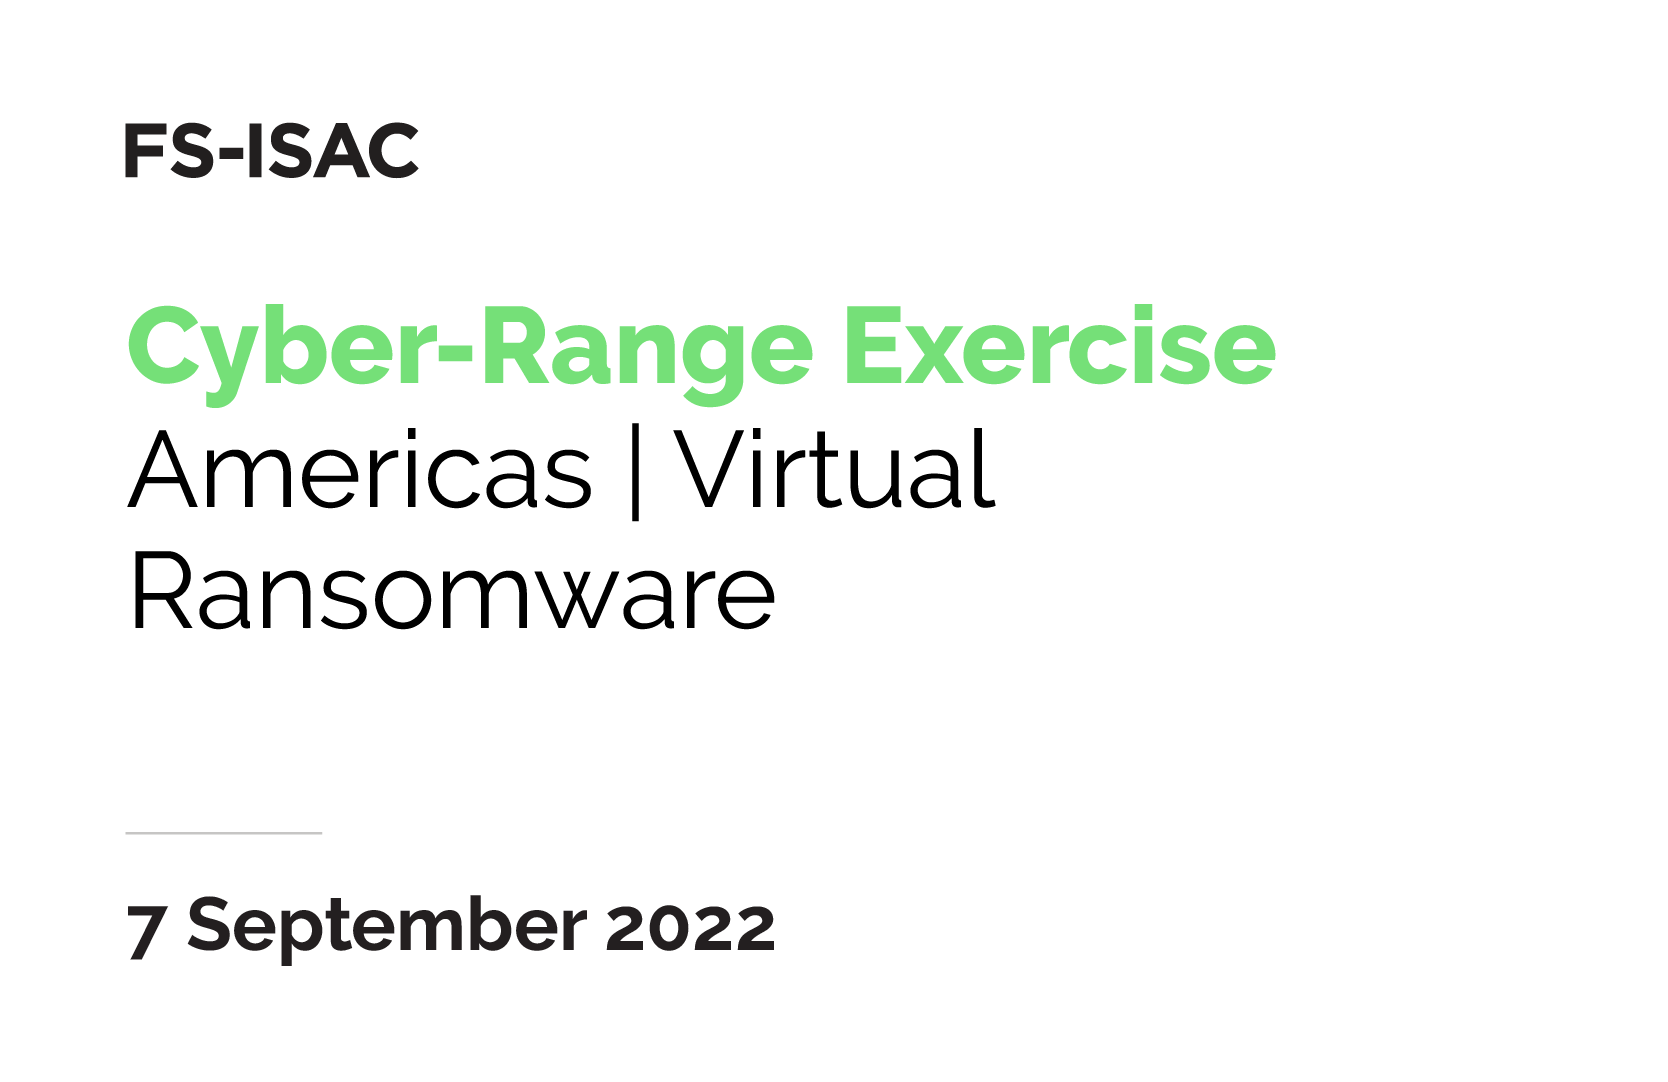 FS-ISAC Cyber Range Exercise | Ransomware Americas | September 2022